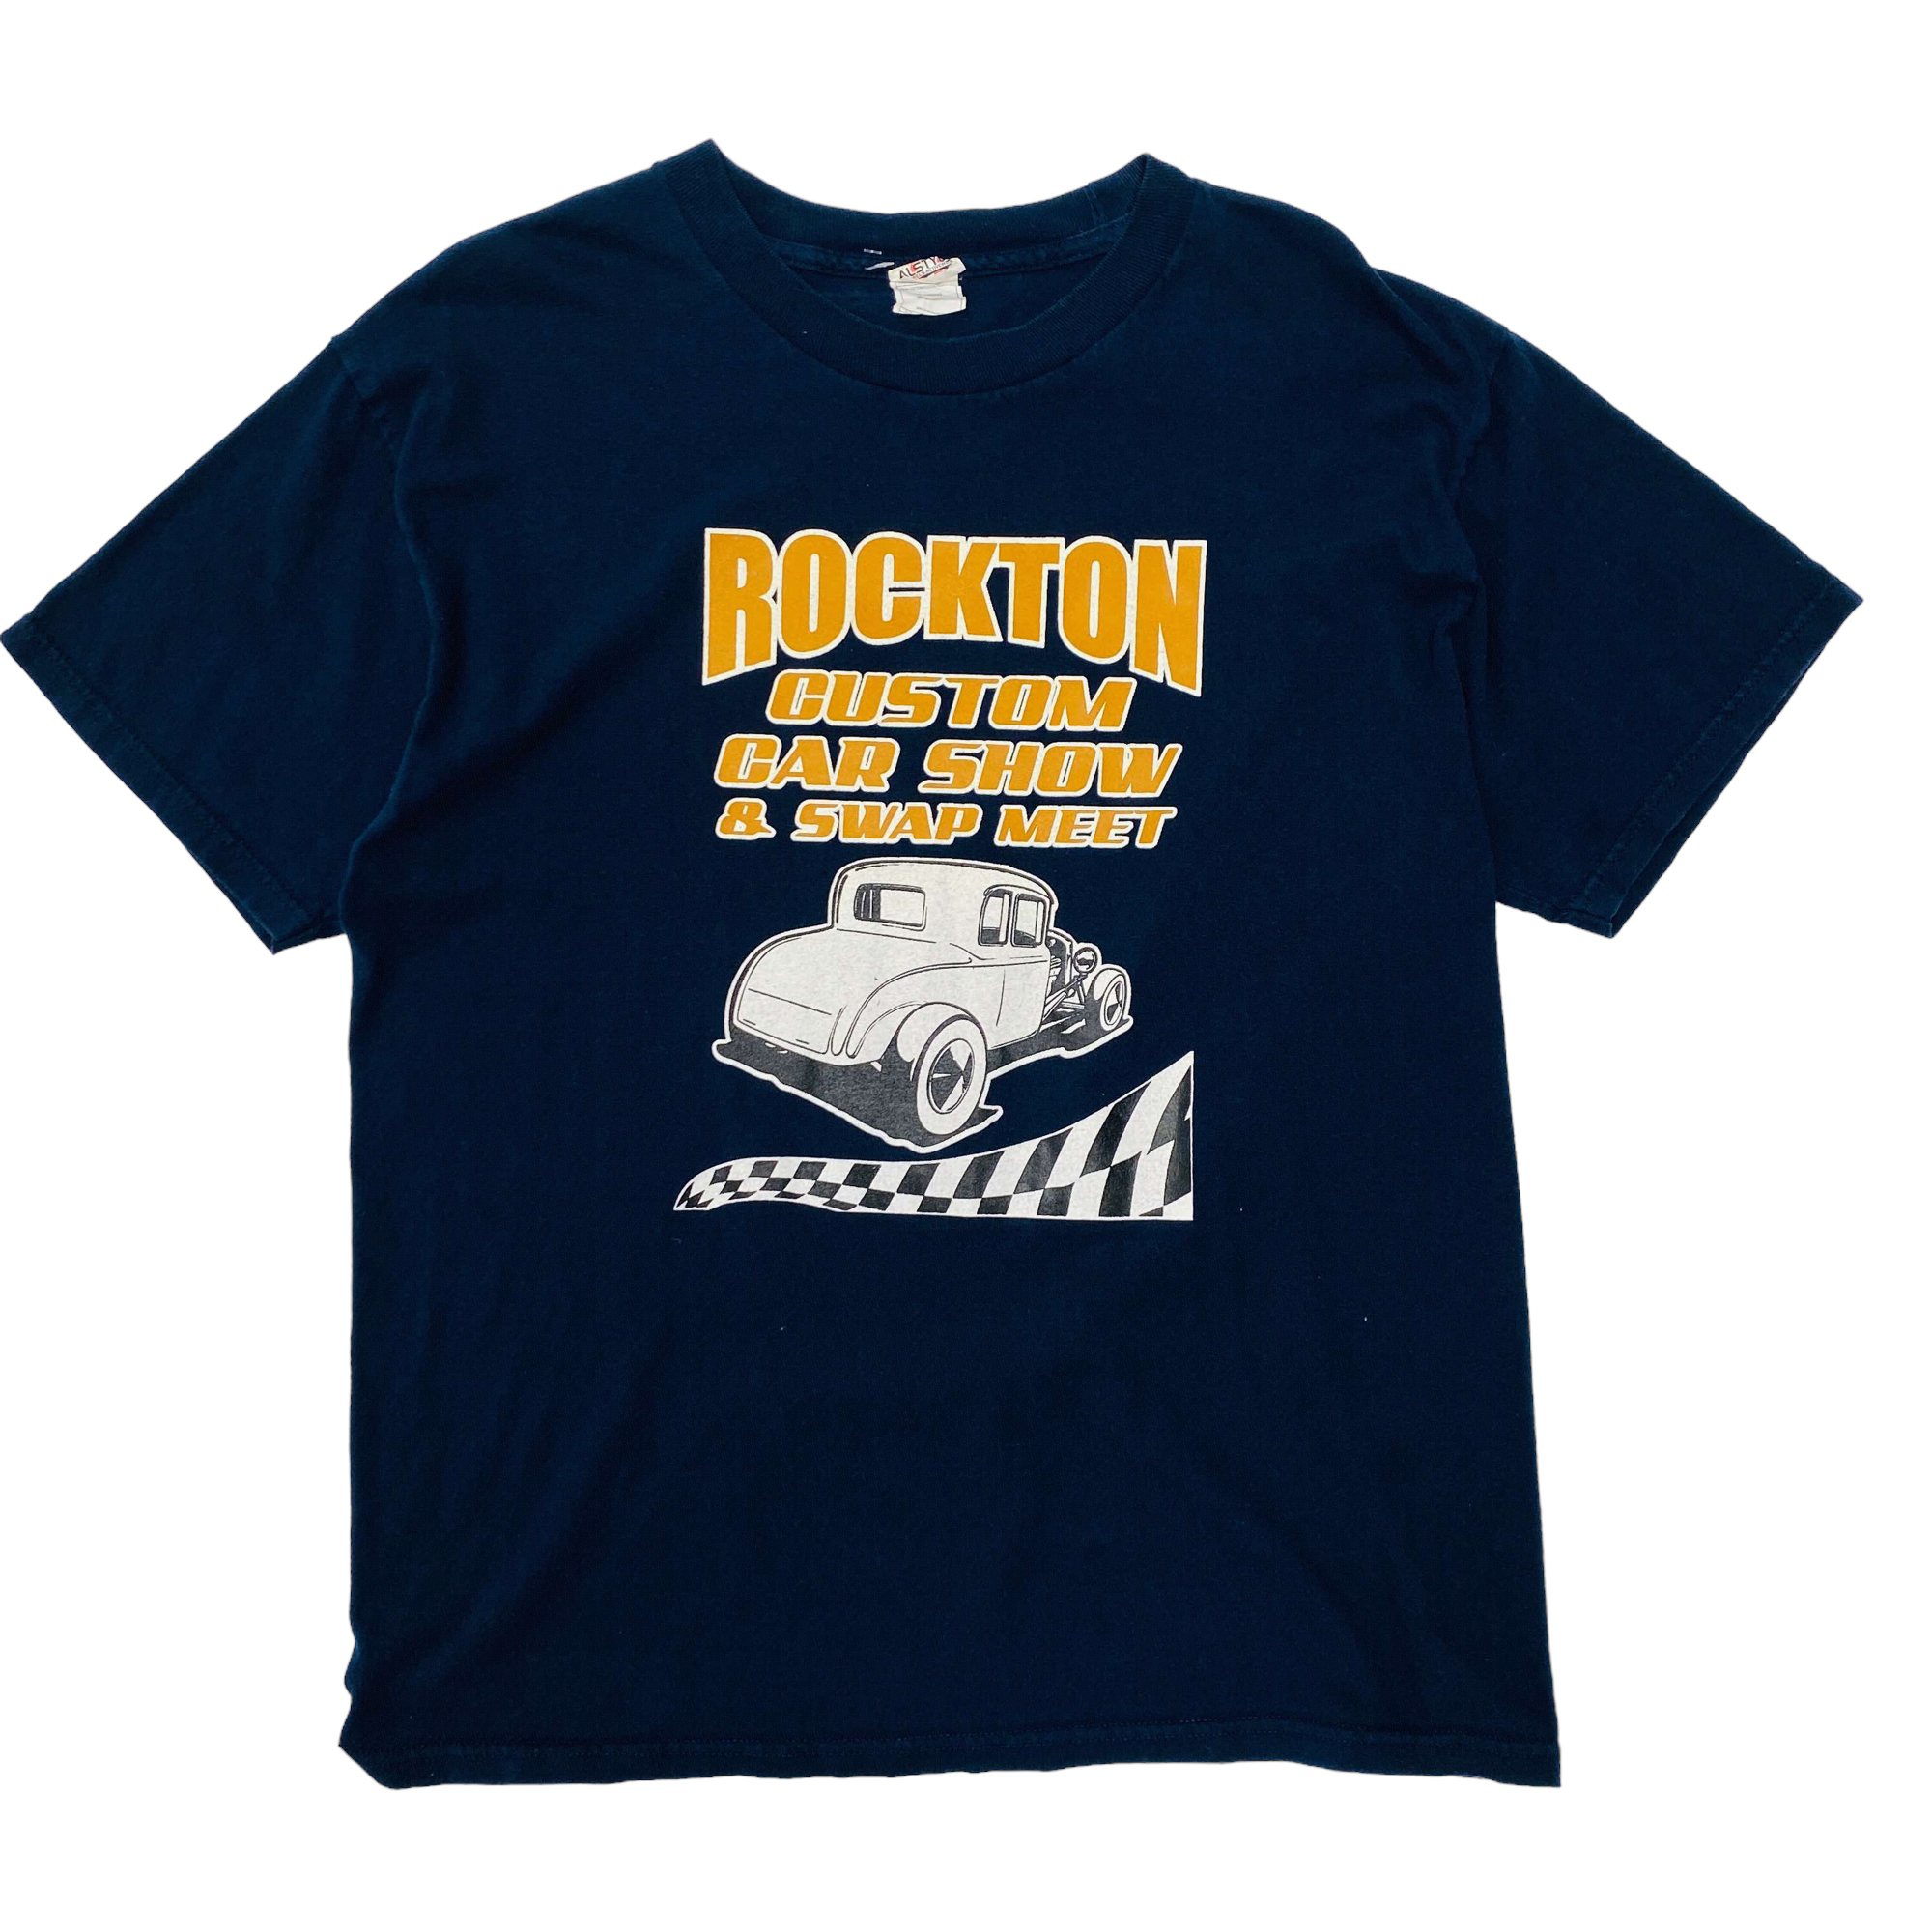 Rockton Car Show Graphic T-Shirt - Medium